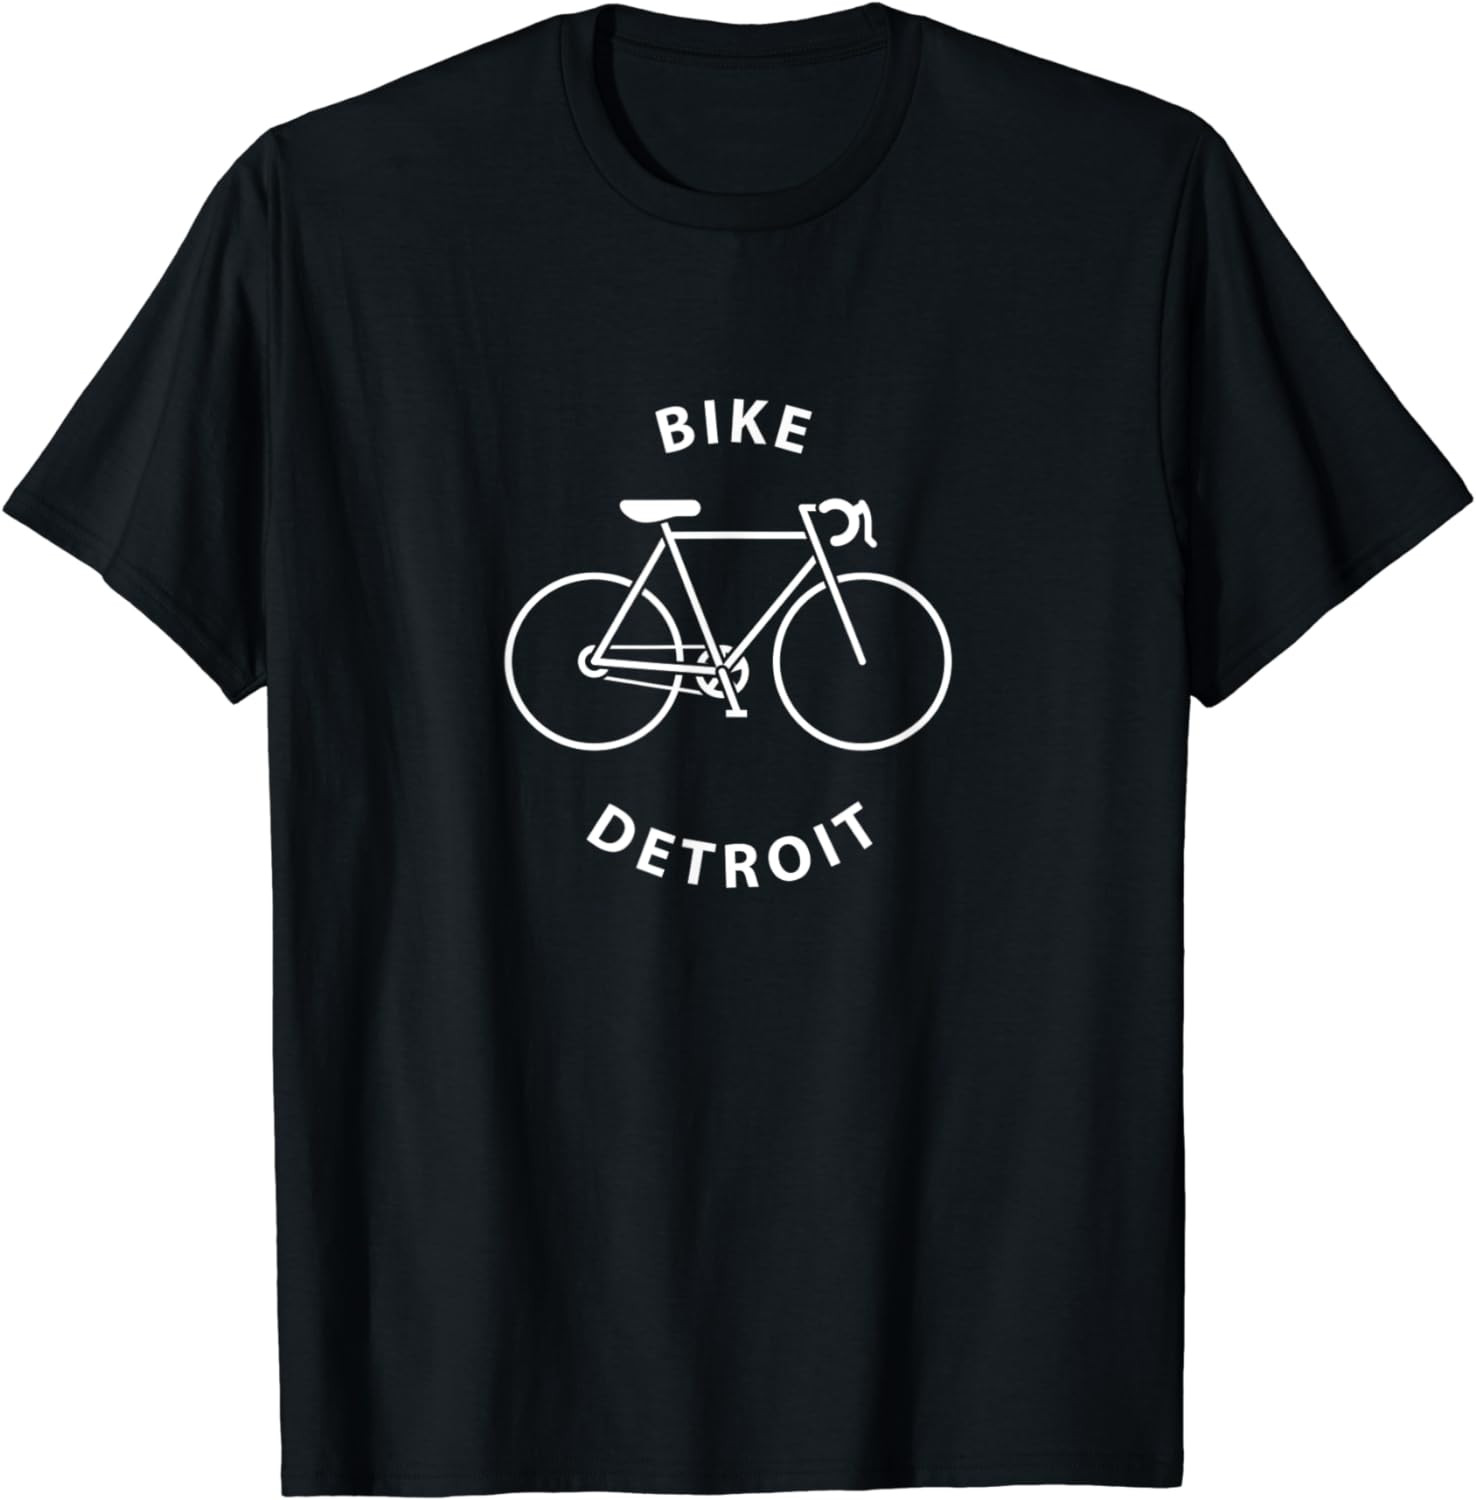 Vintage Style Bike - Detroit Michigan T-Shirt